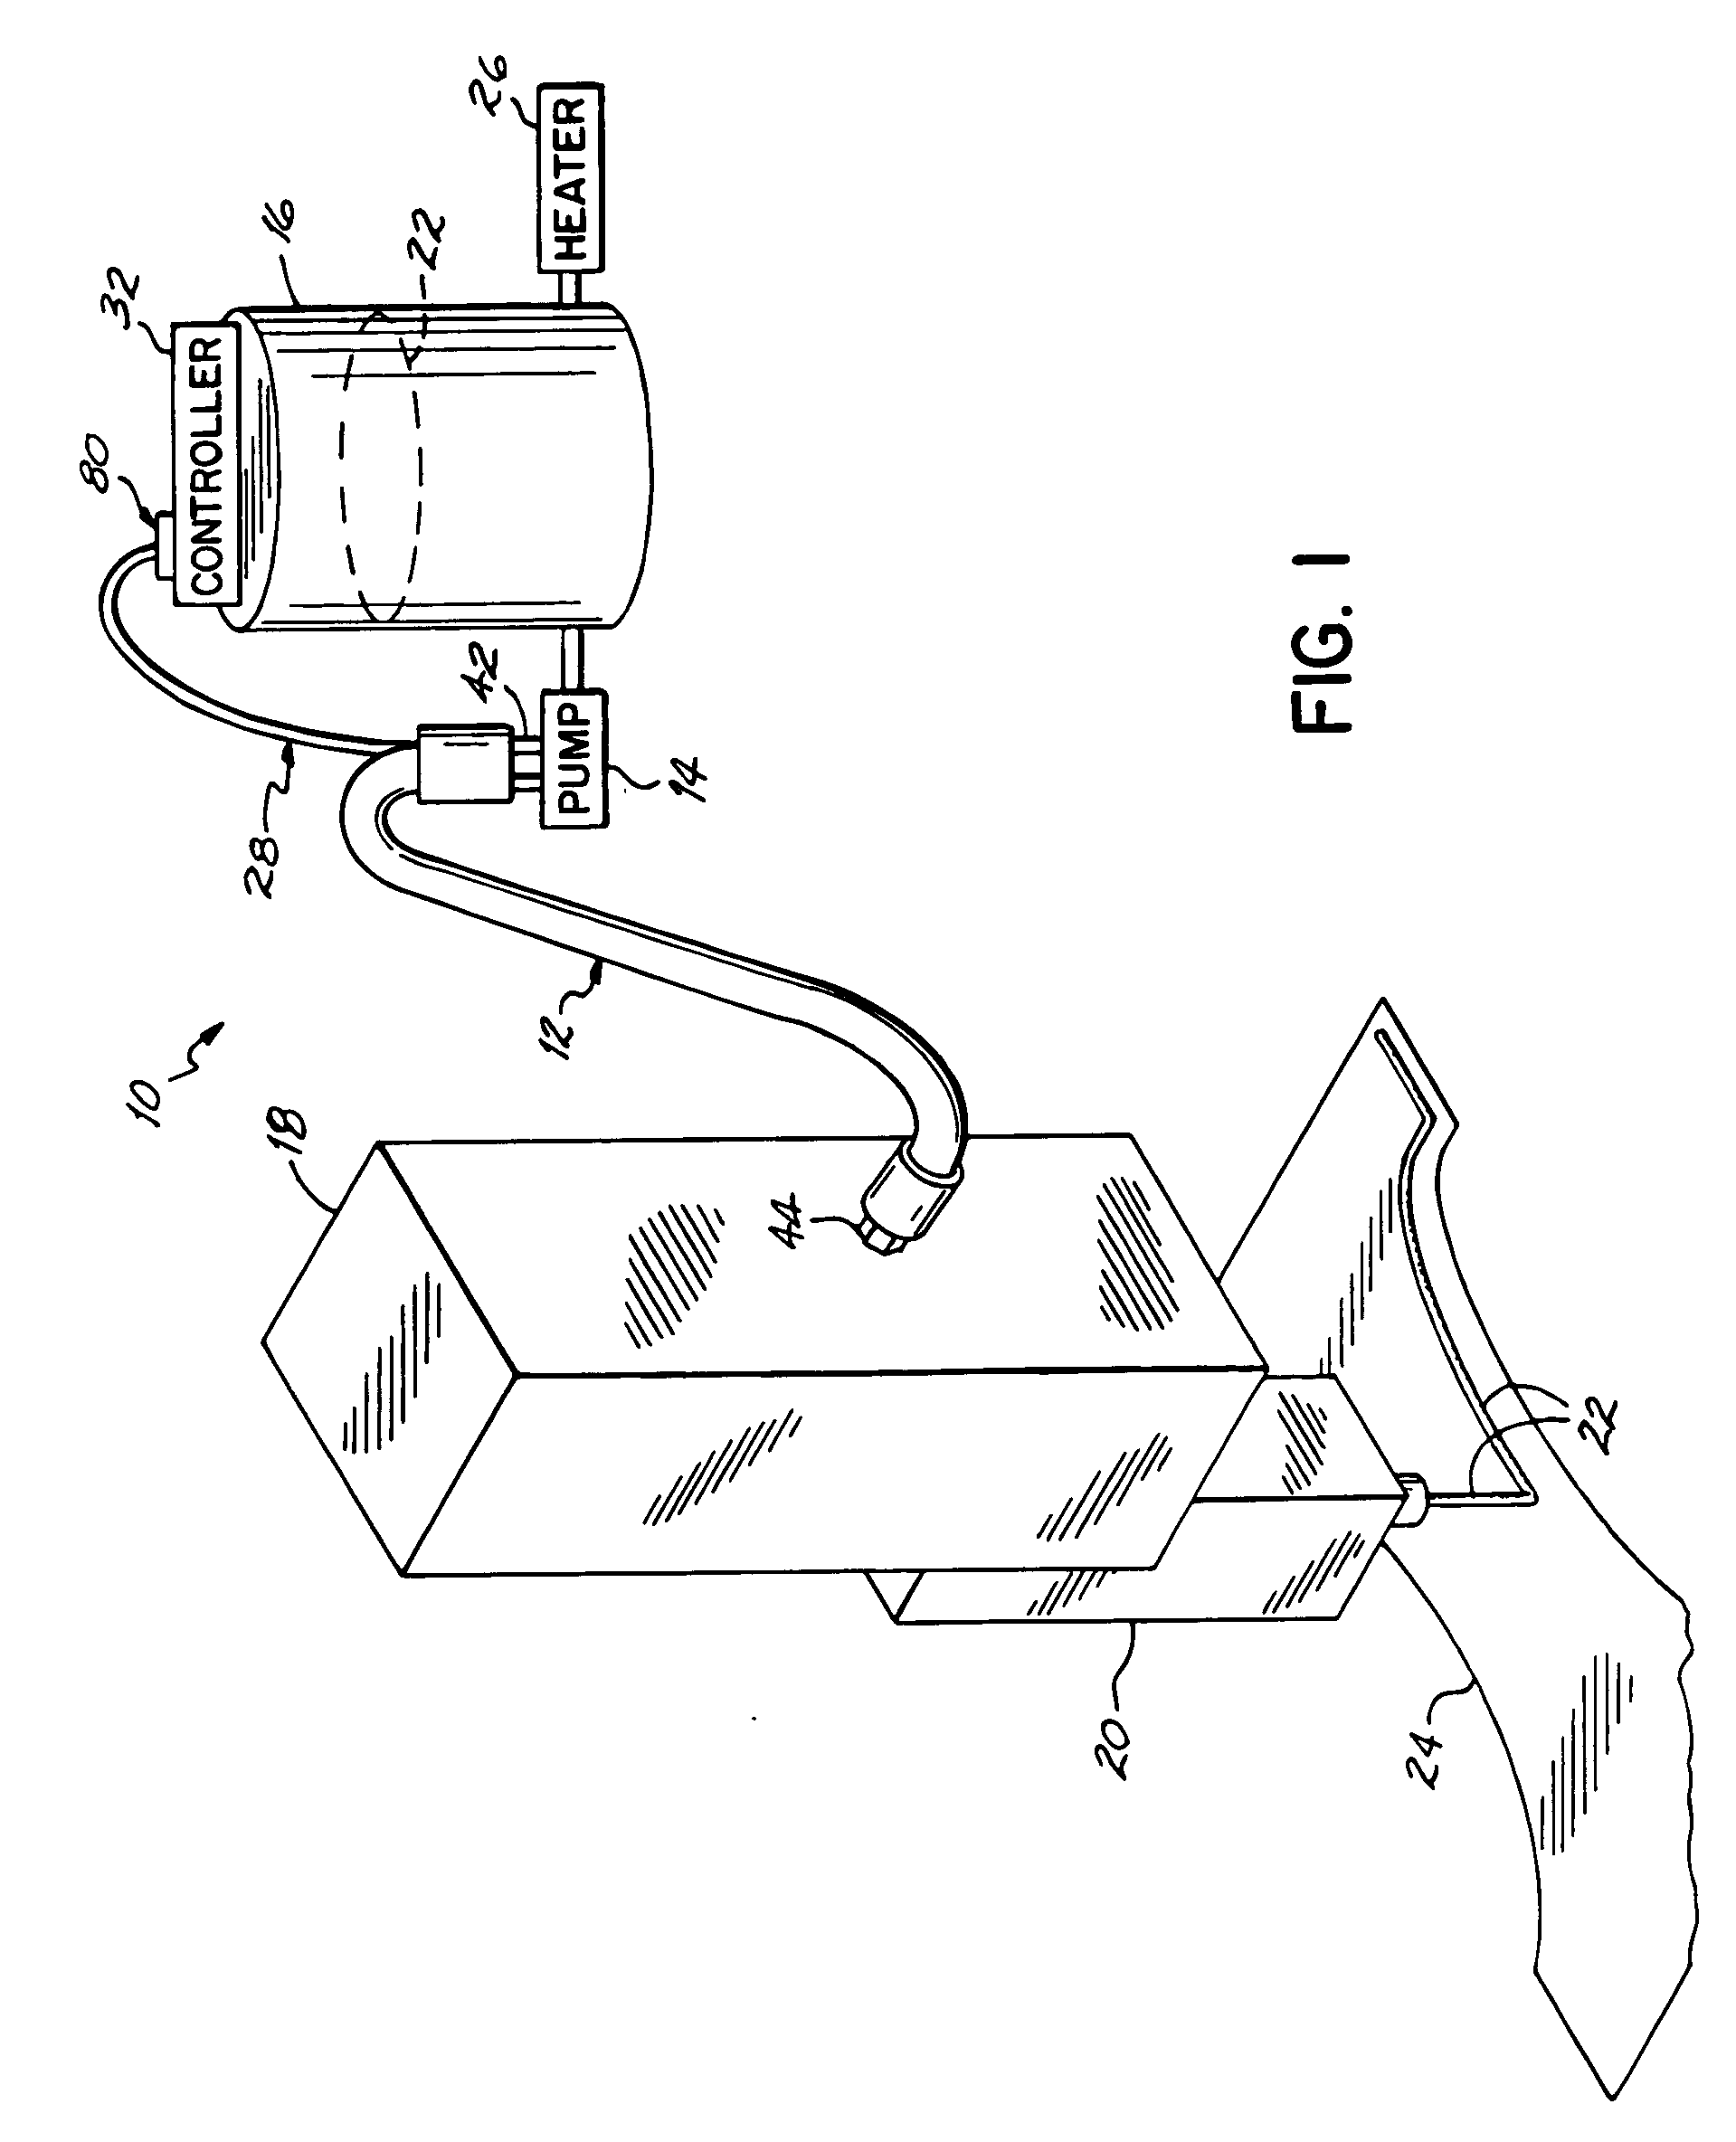 Heated device and method of redundant temperature sensing